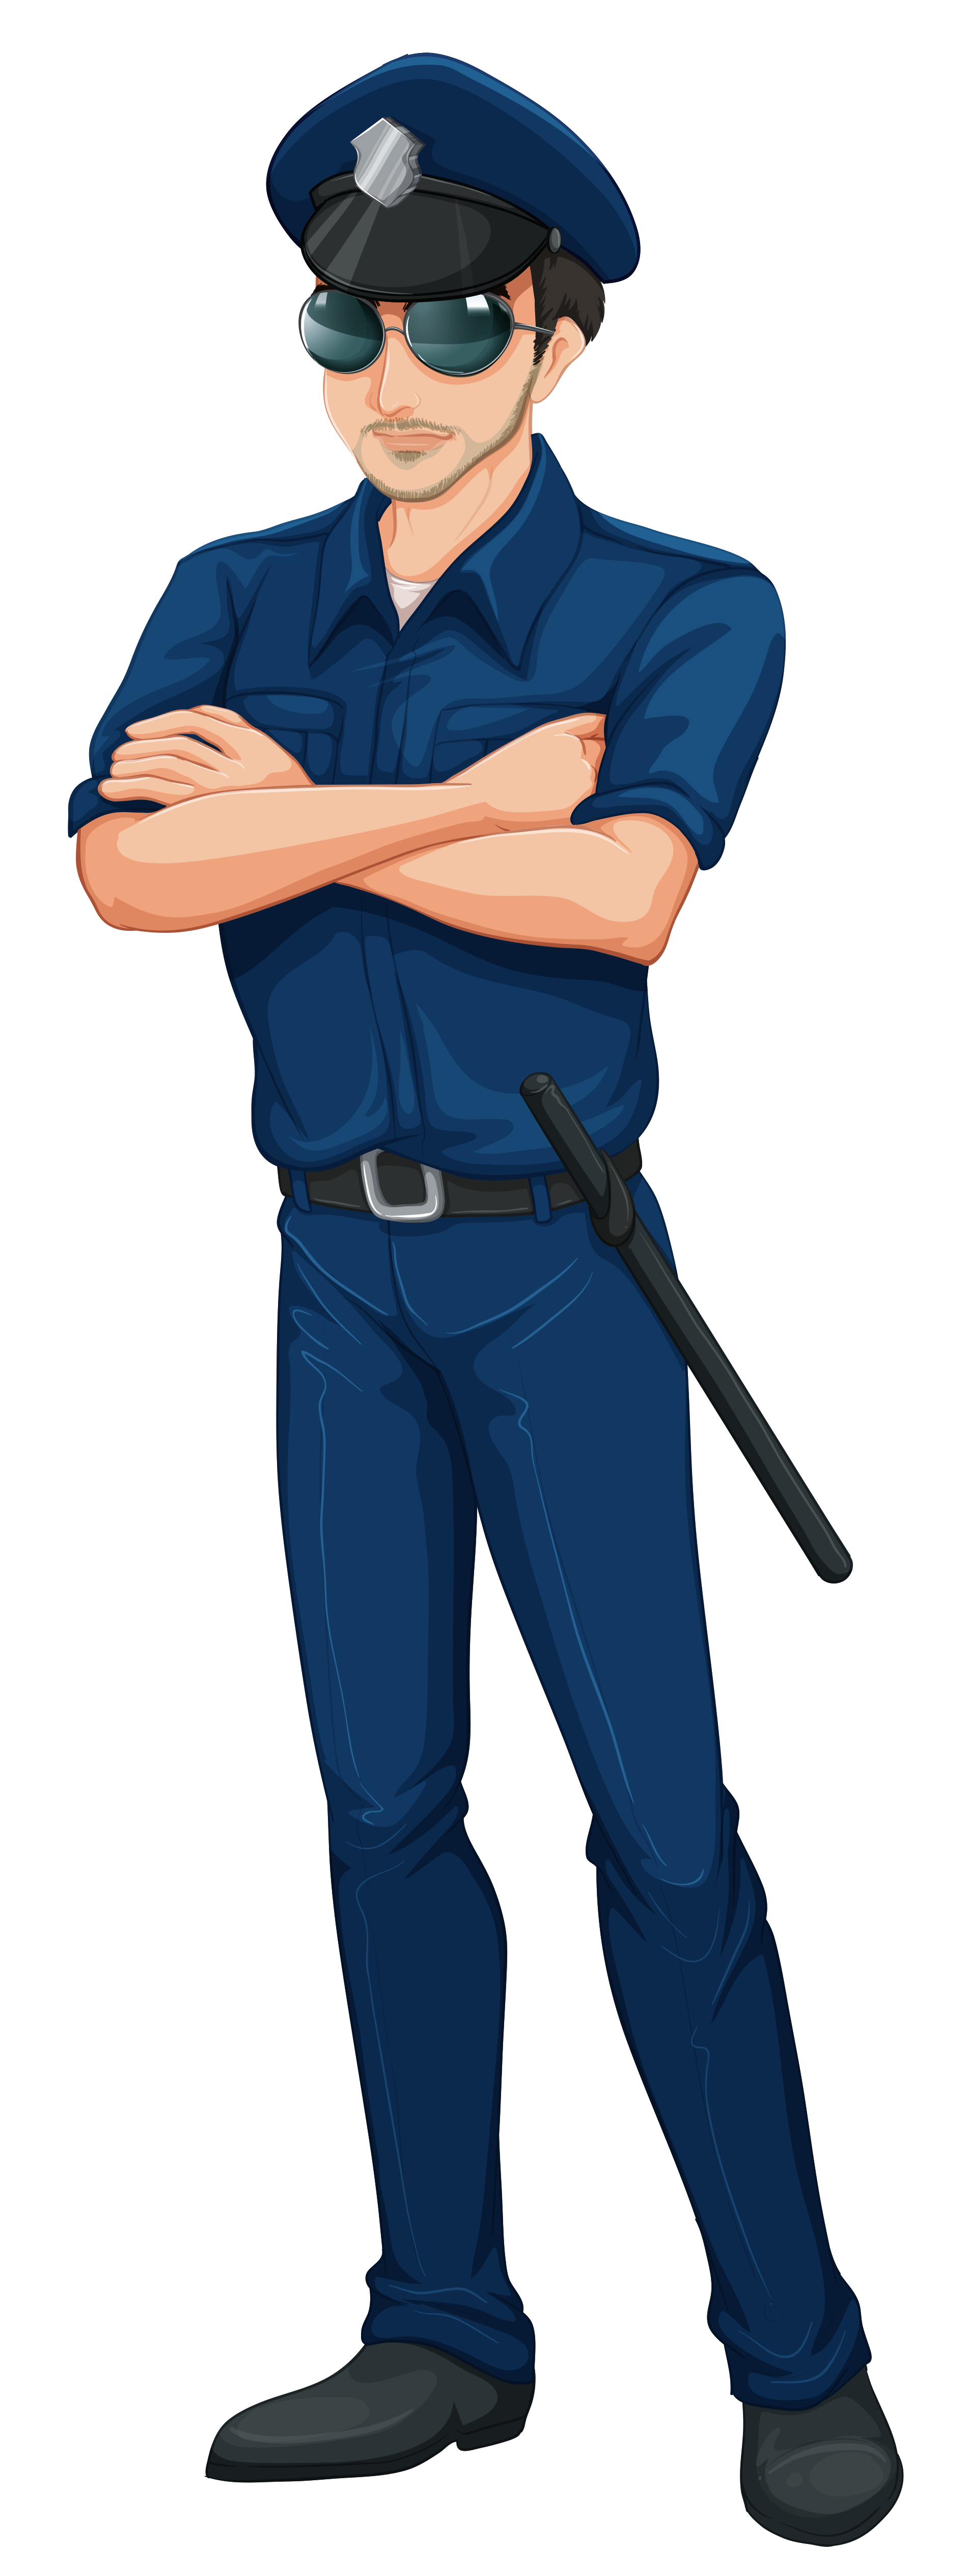 Clip art police officer unifo